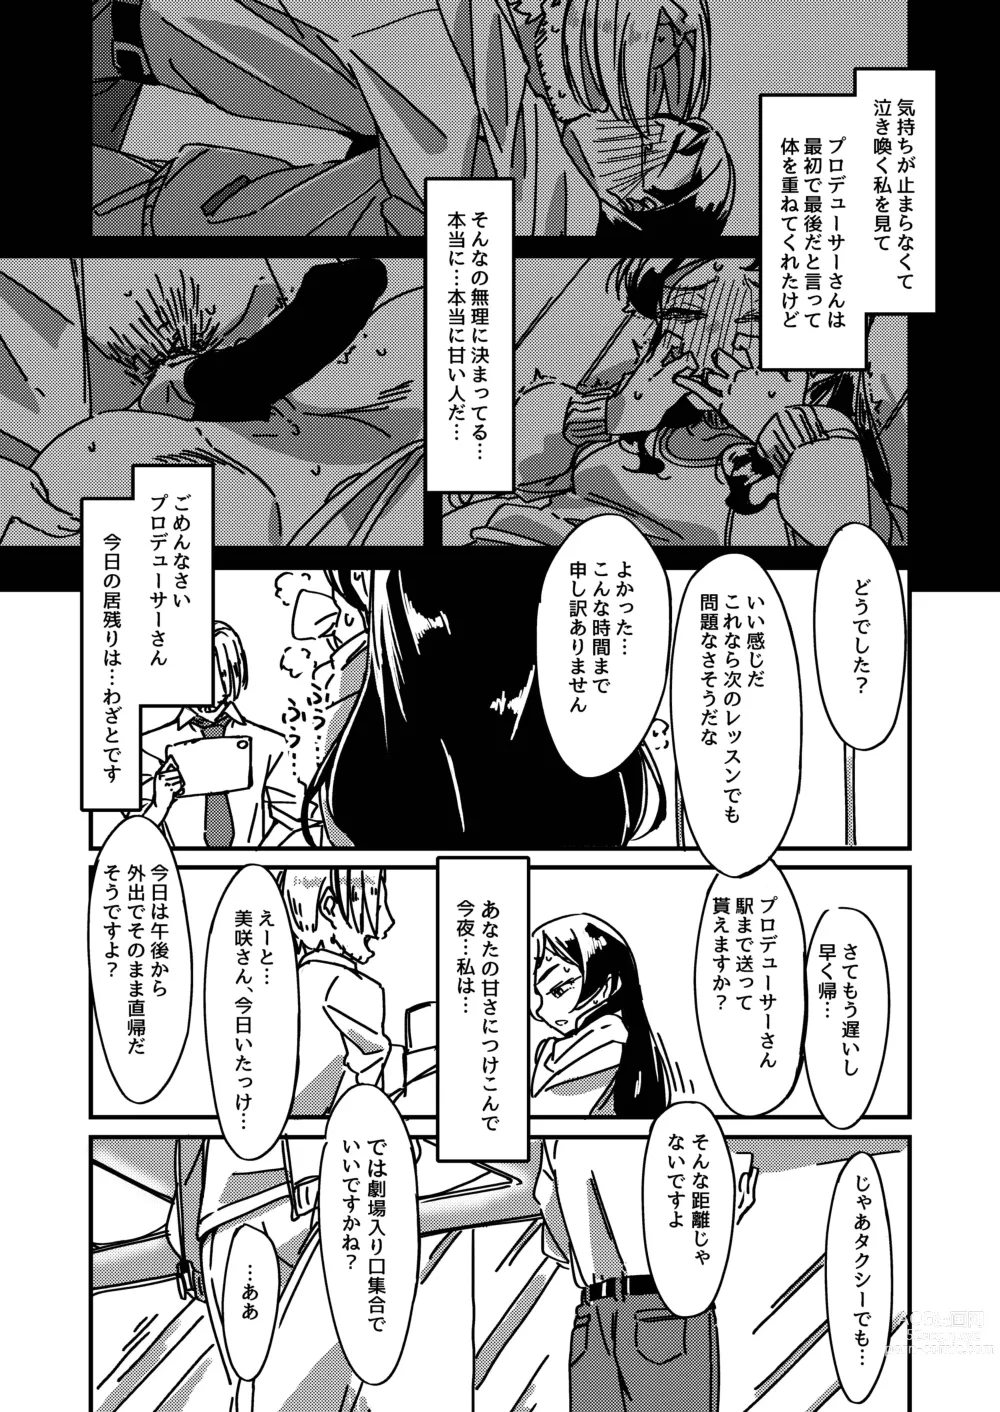 Page 8 of doujinshi Kuroneko no Kyouji + Aruhi no Kuro Usagi